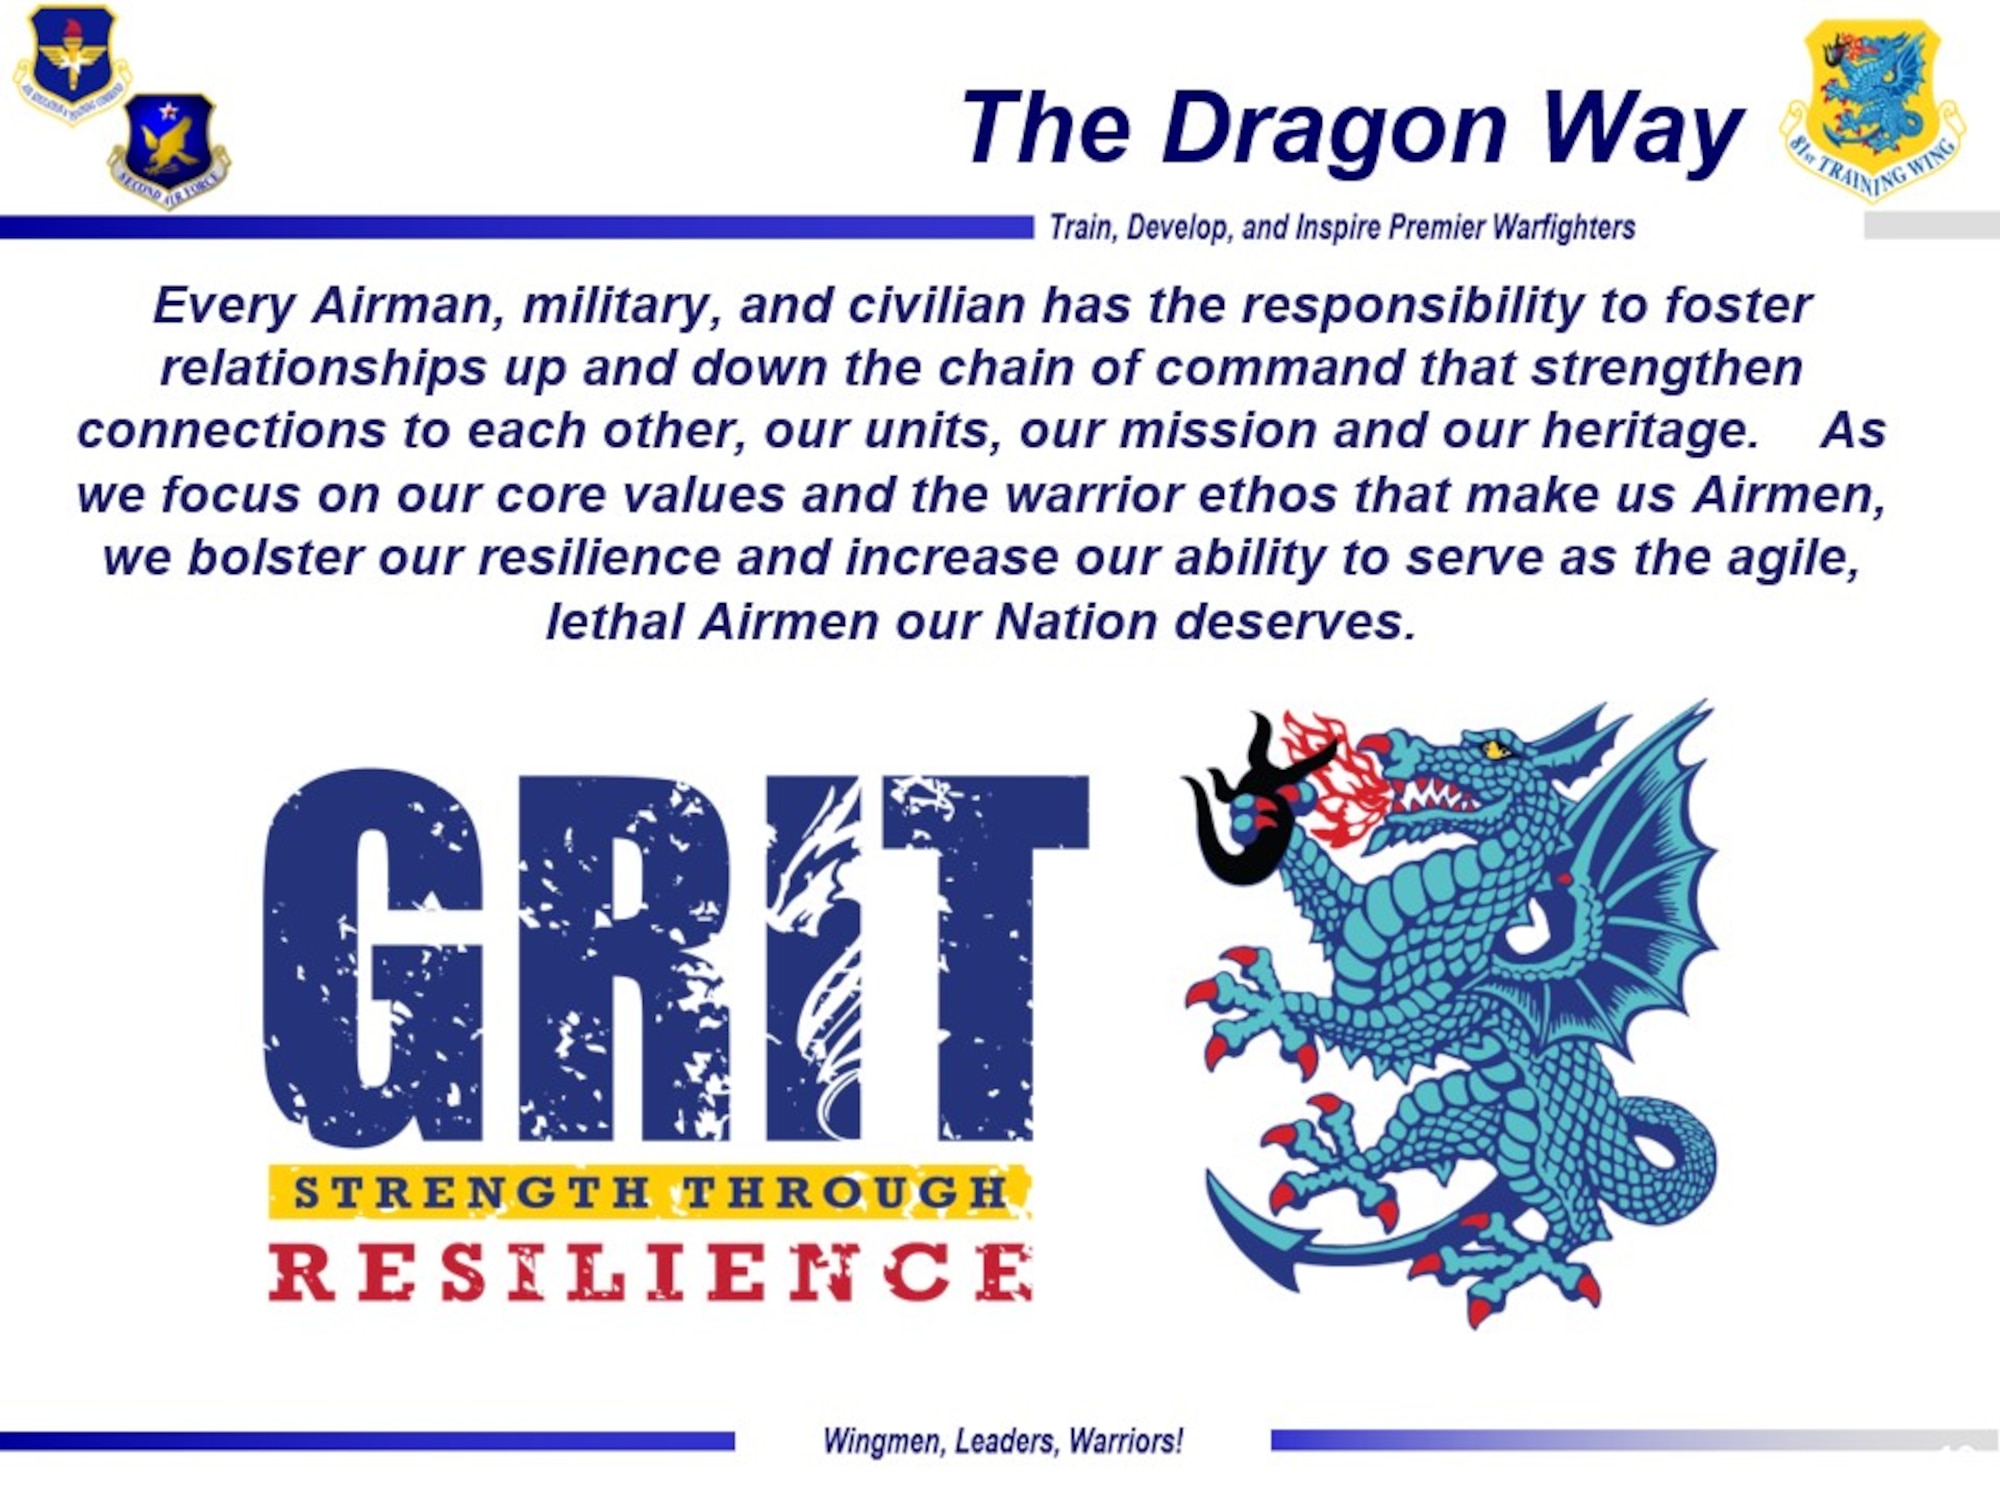 Dragon GRIT Facilitator Training slide.